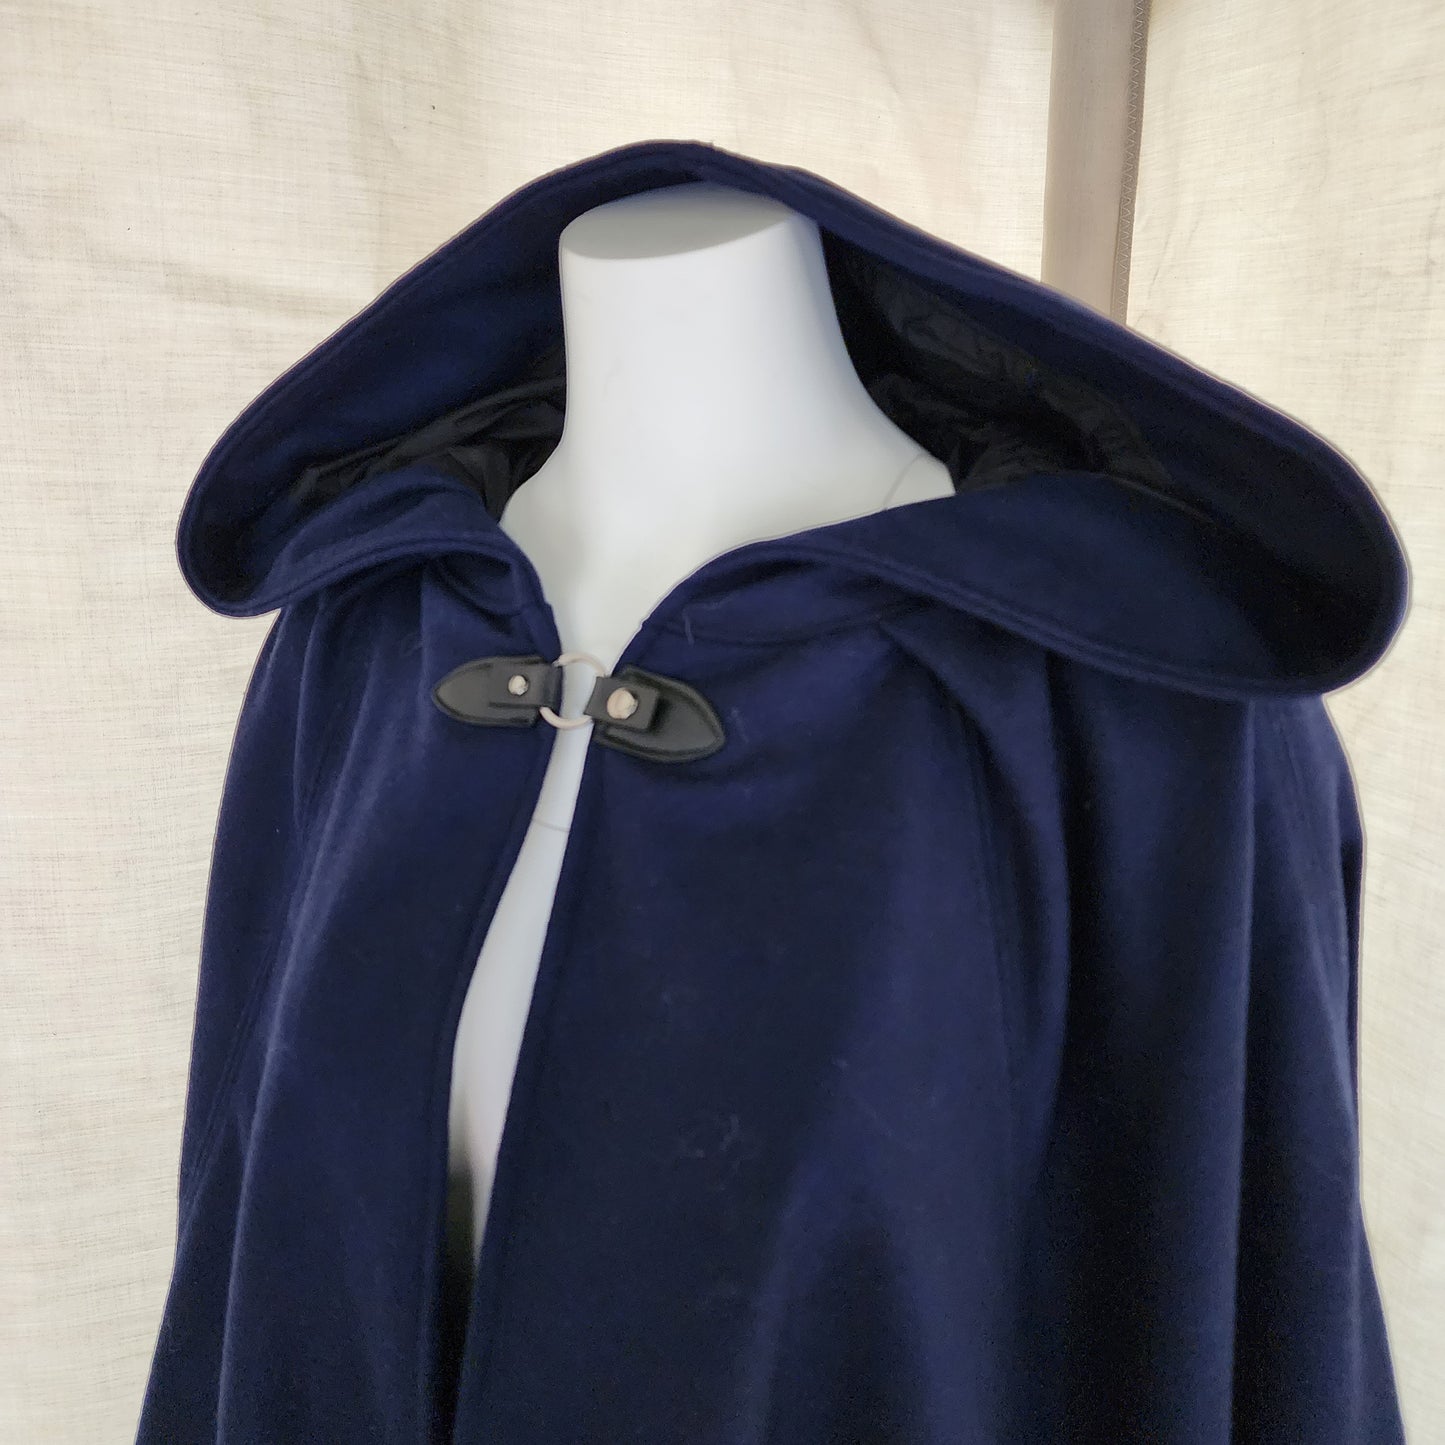 Winter Wanderer Cloak- Navy cloak with black water resistant lining